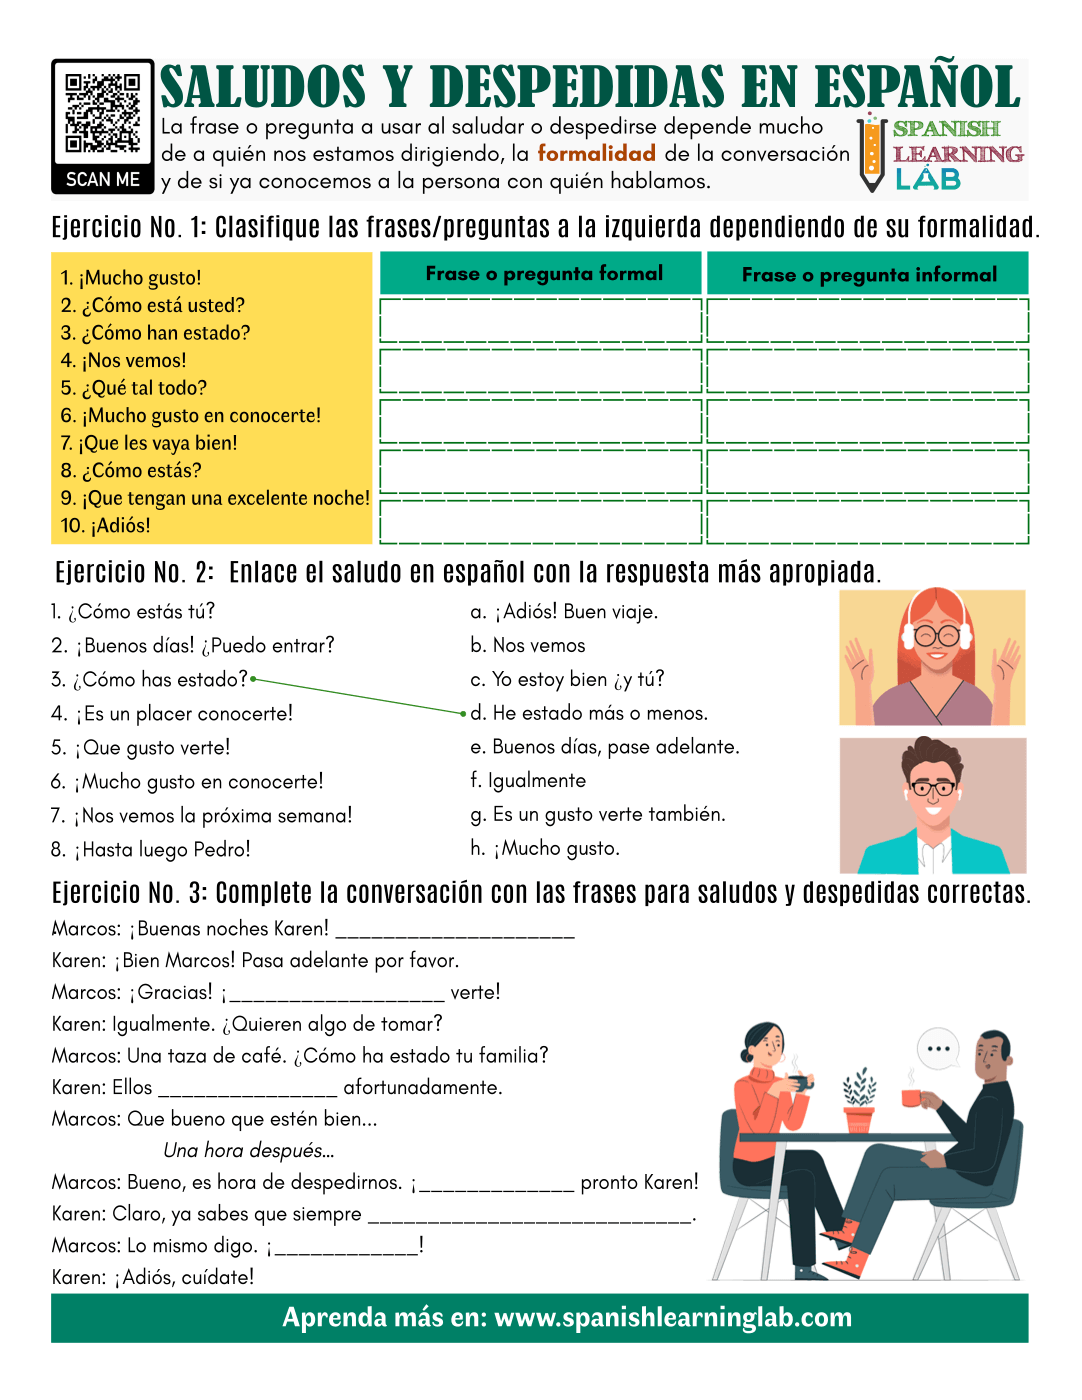 Spanish Household Items Vocabulary Matching Worksheet & Answer Key